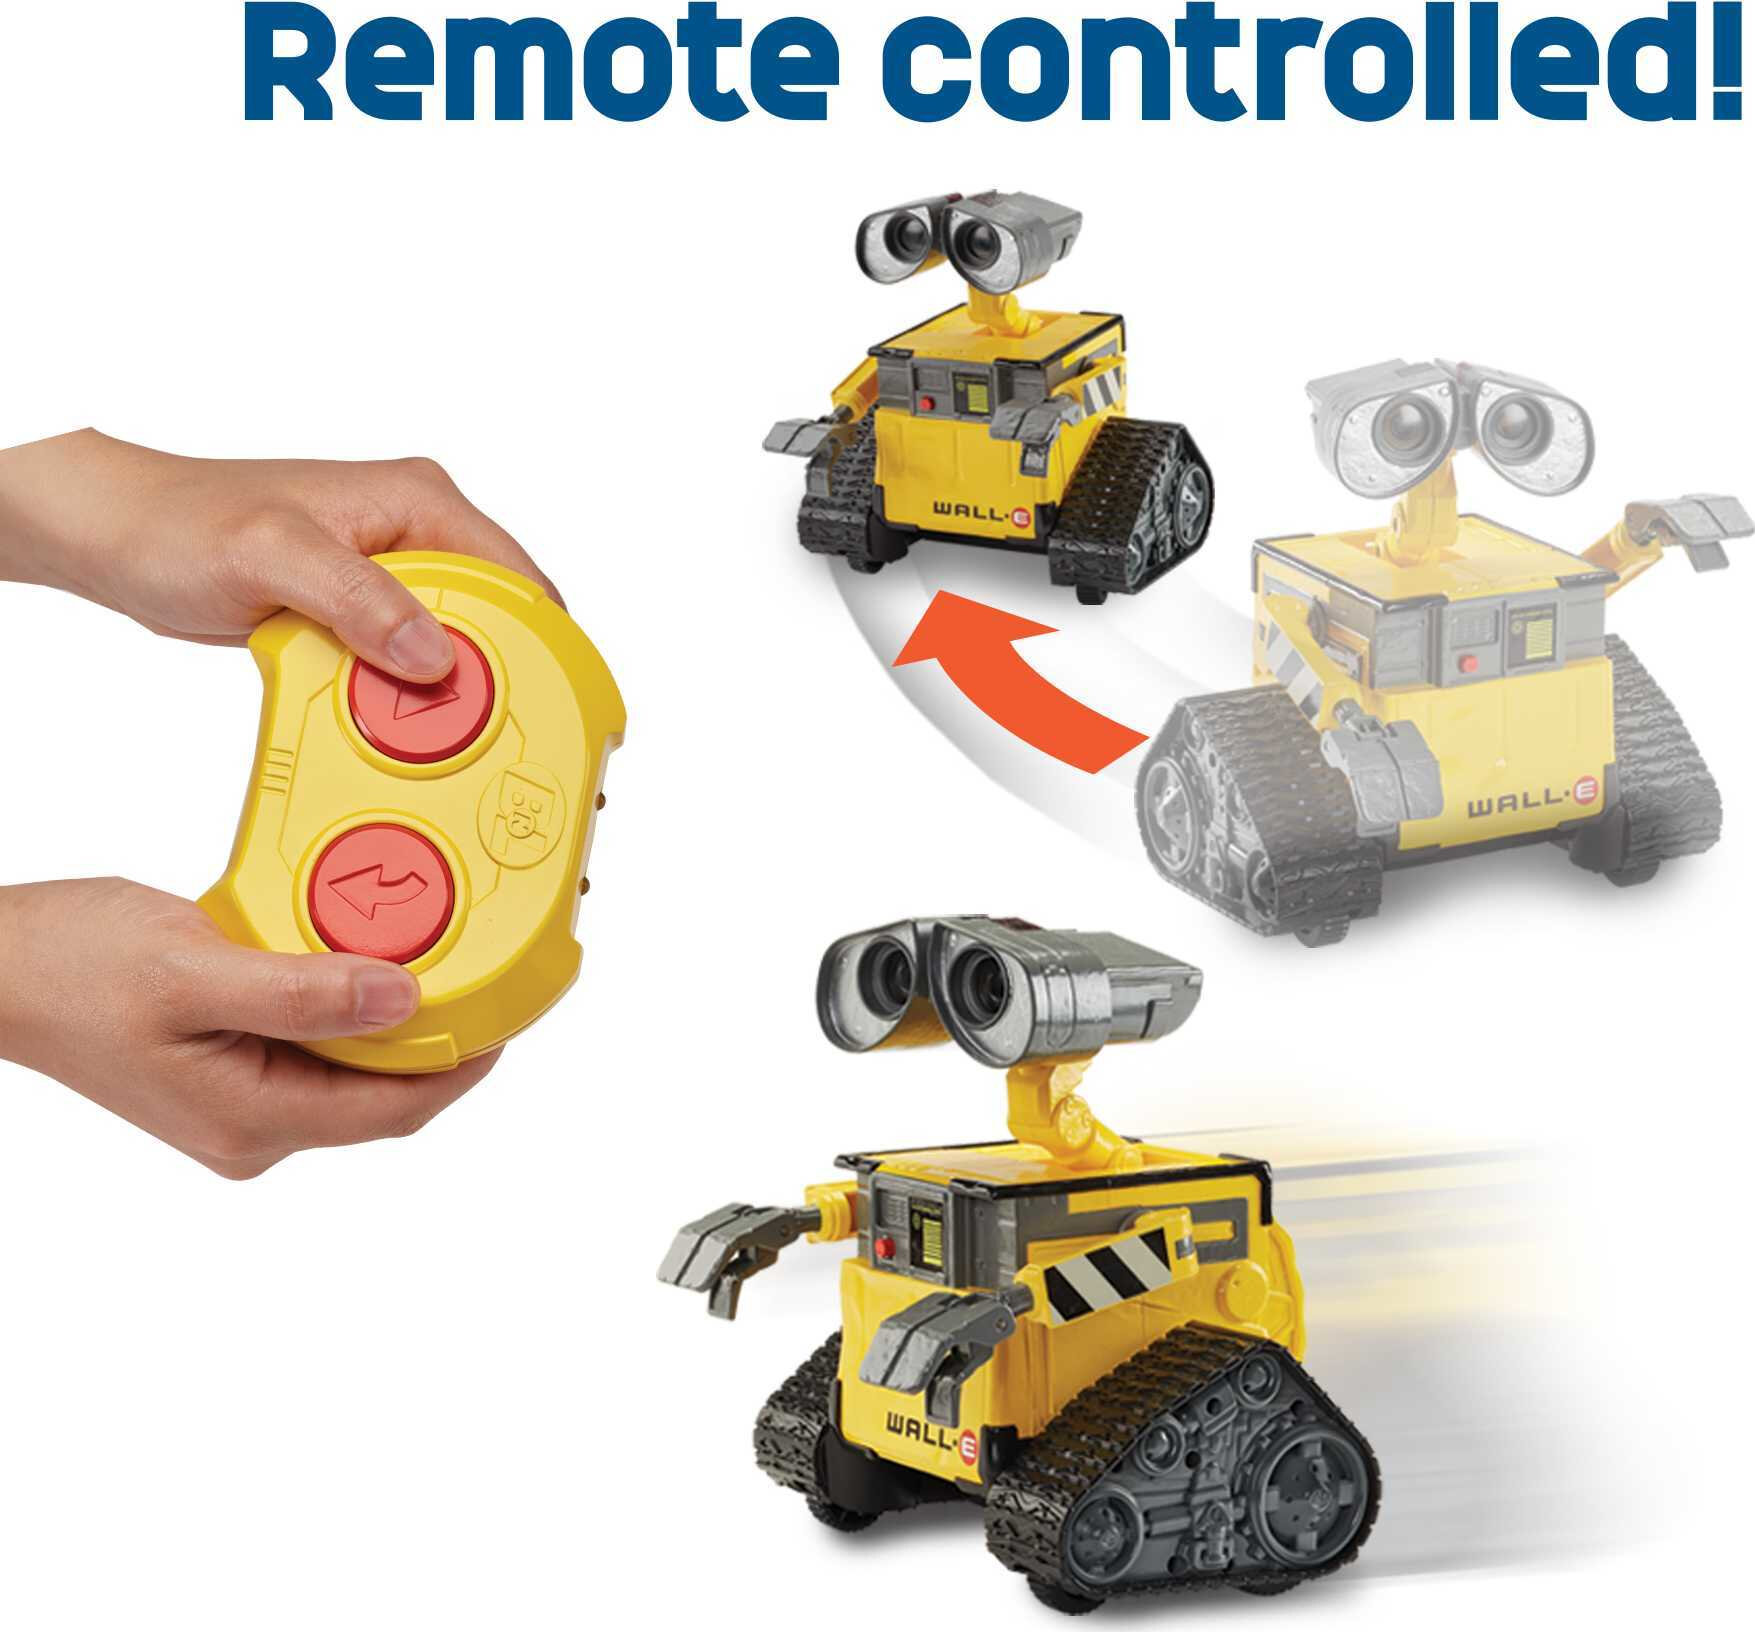 Disney and Pixar WALL-E Robot Toy, Remote Control Hello WALL-E Robot - image 4 of 7